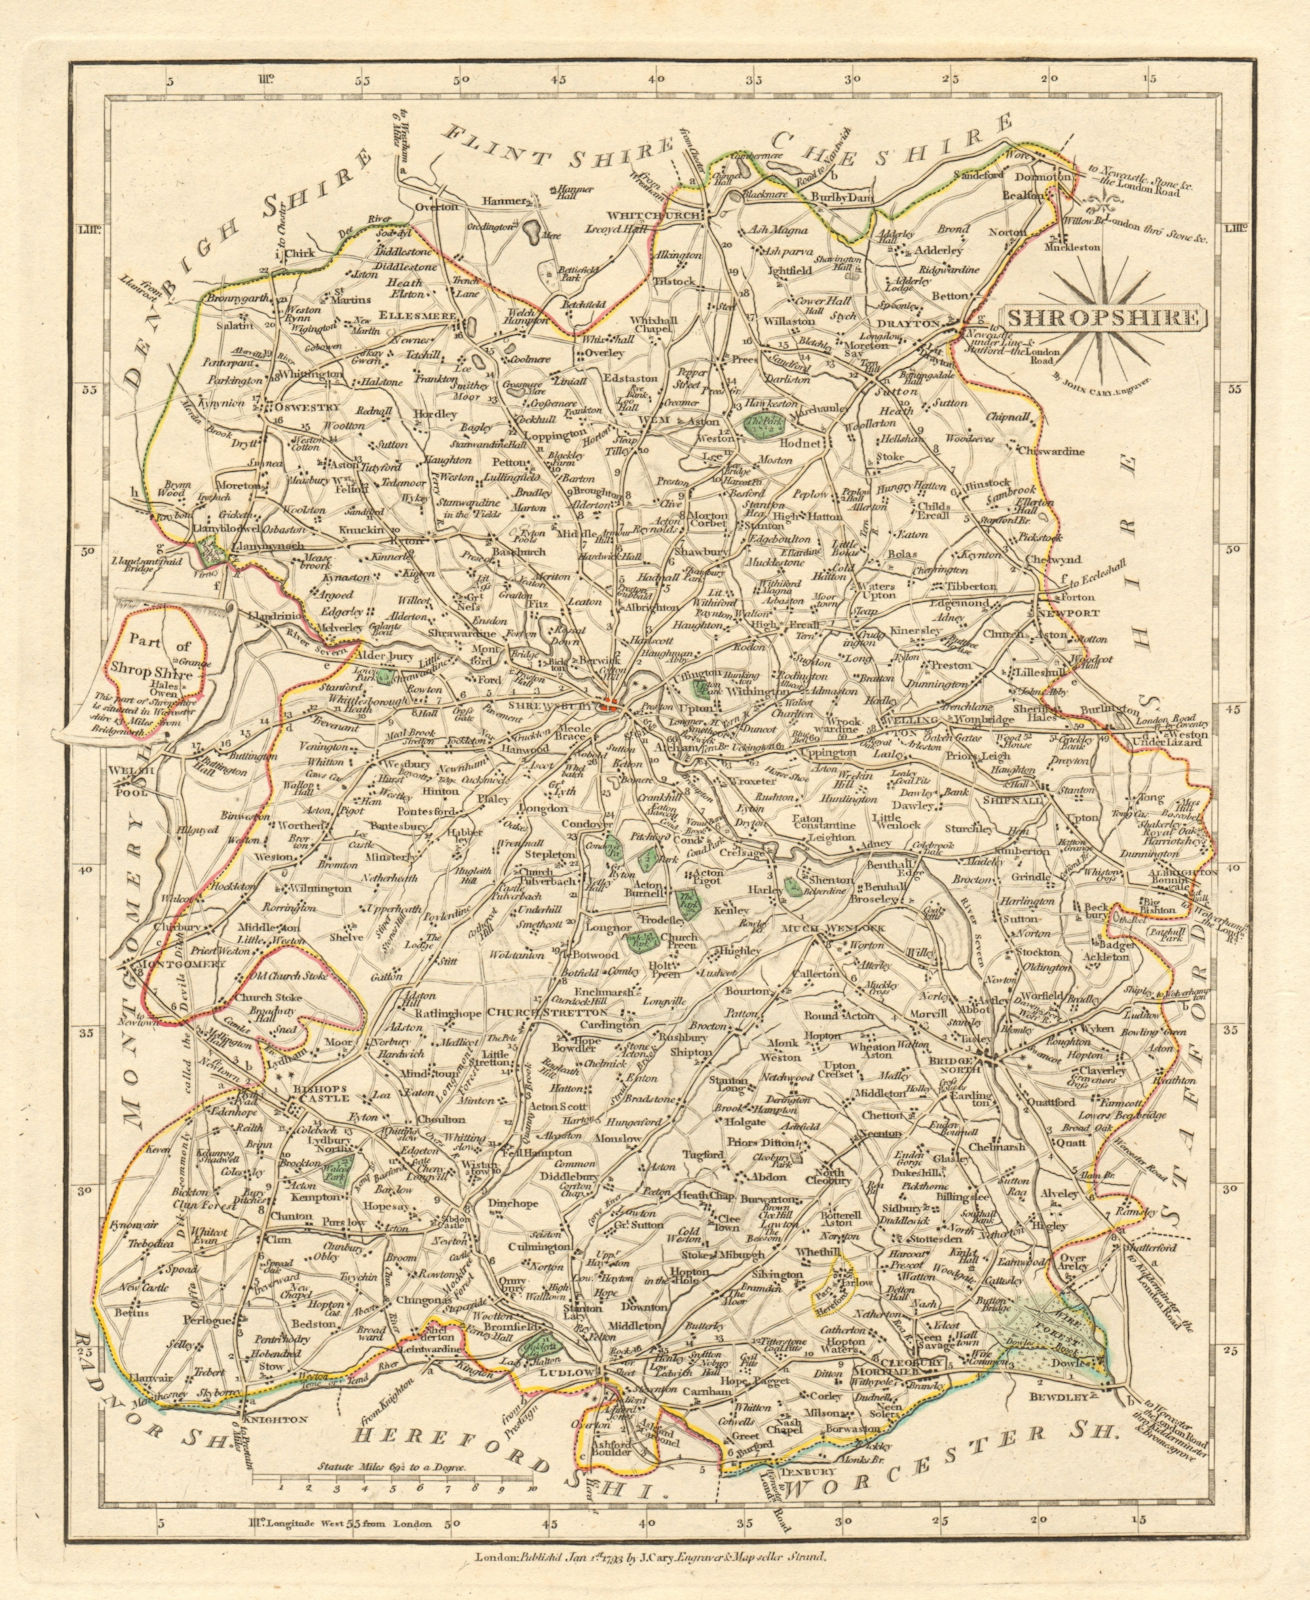 Antique county map of SHROPSHIRE by JOHN CARY. Original outline colour 1793